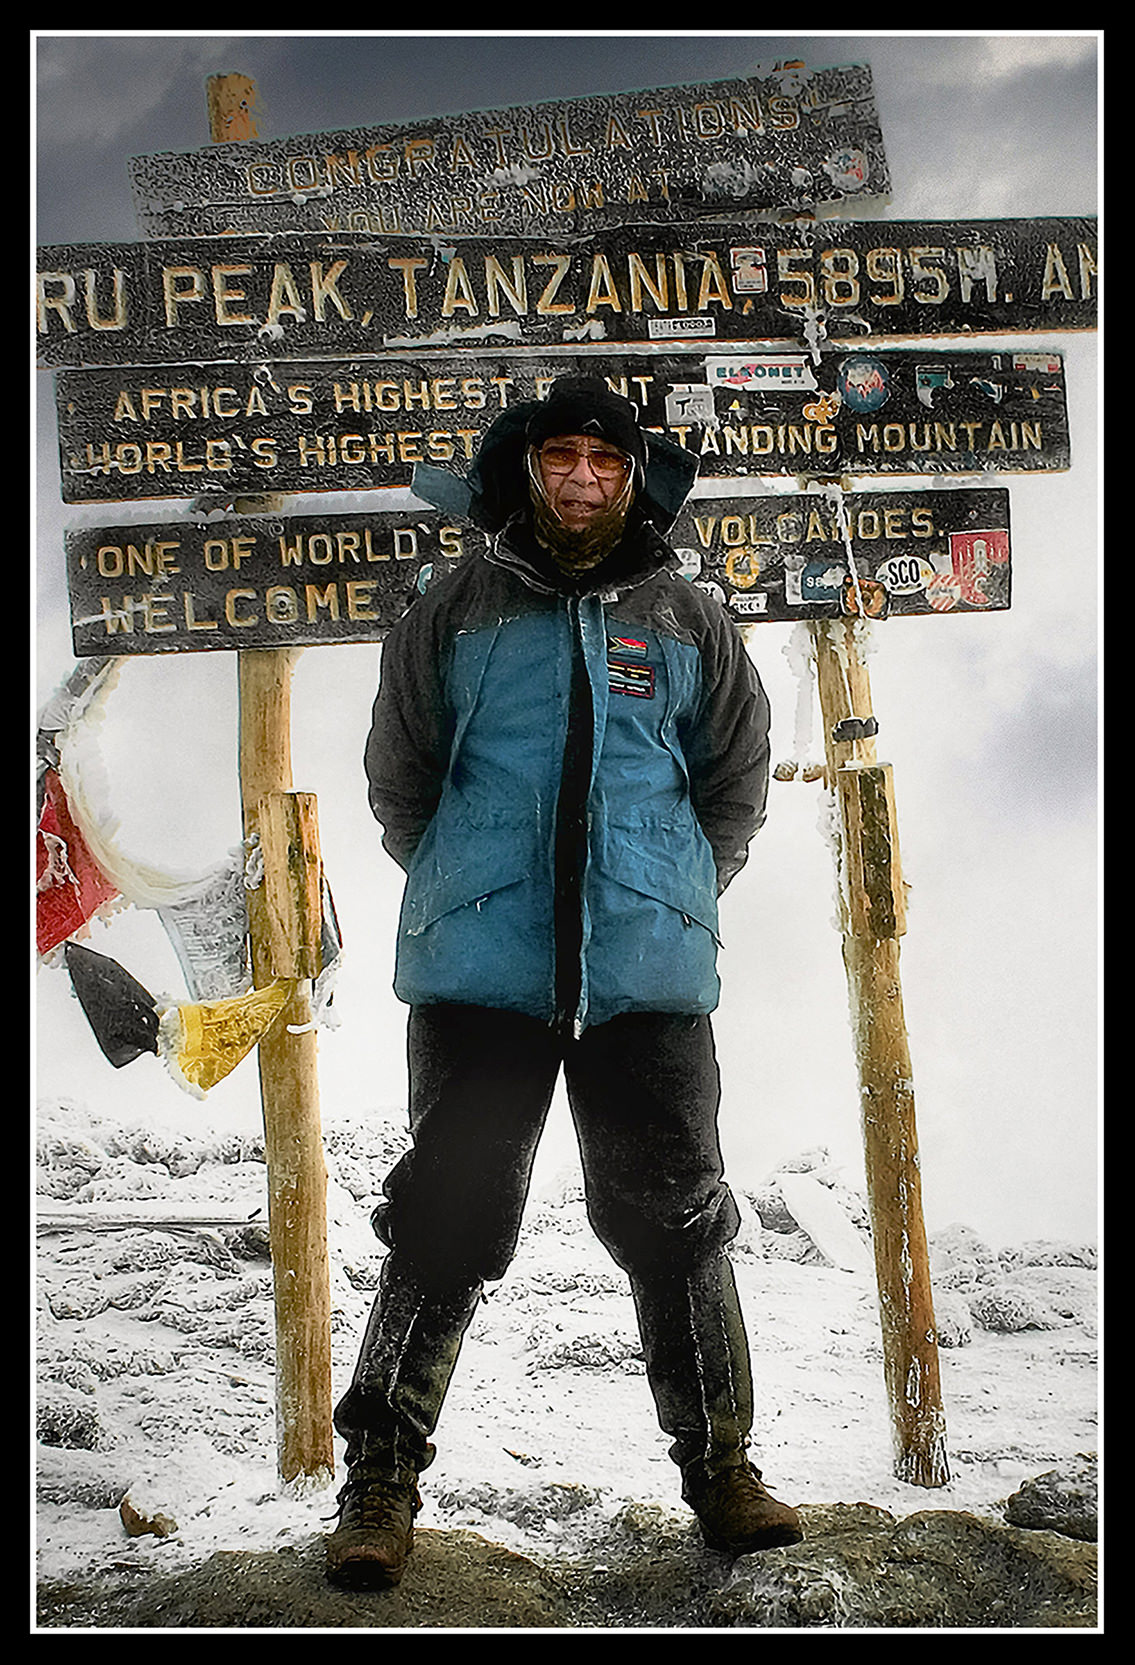 Peter wick Uhuru Peak Kilimanjaro 2005